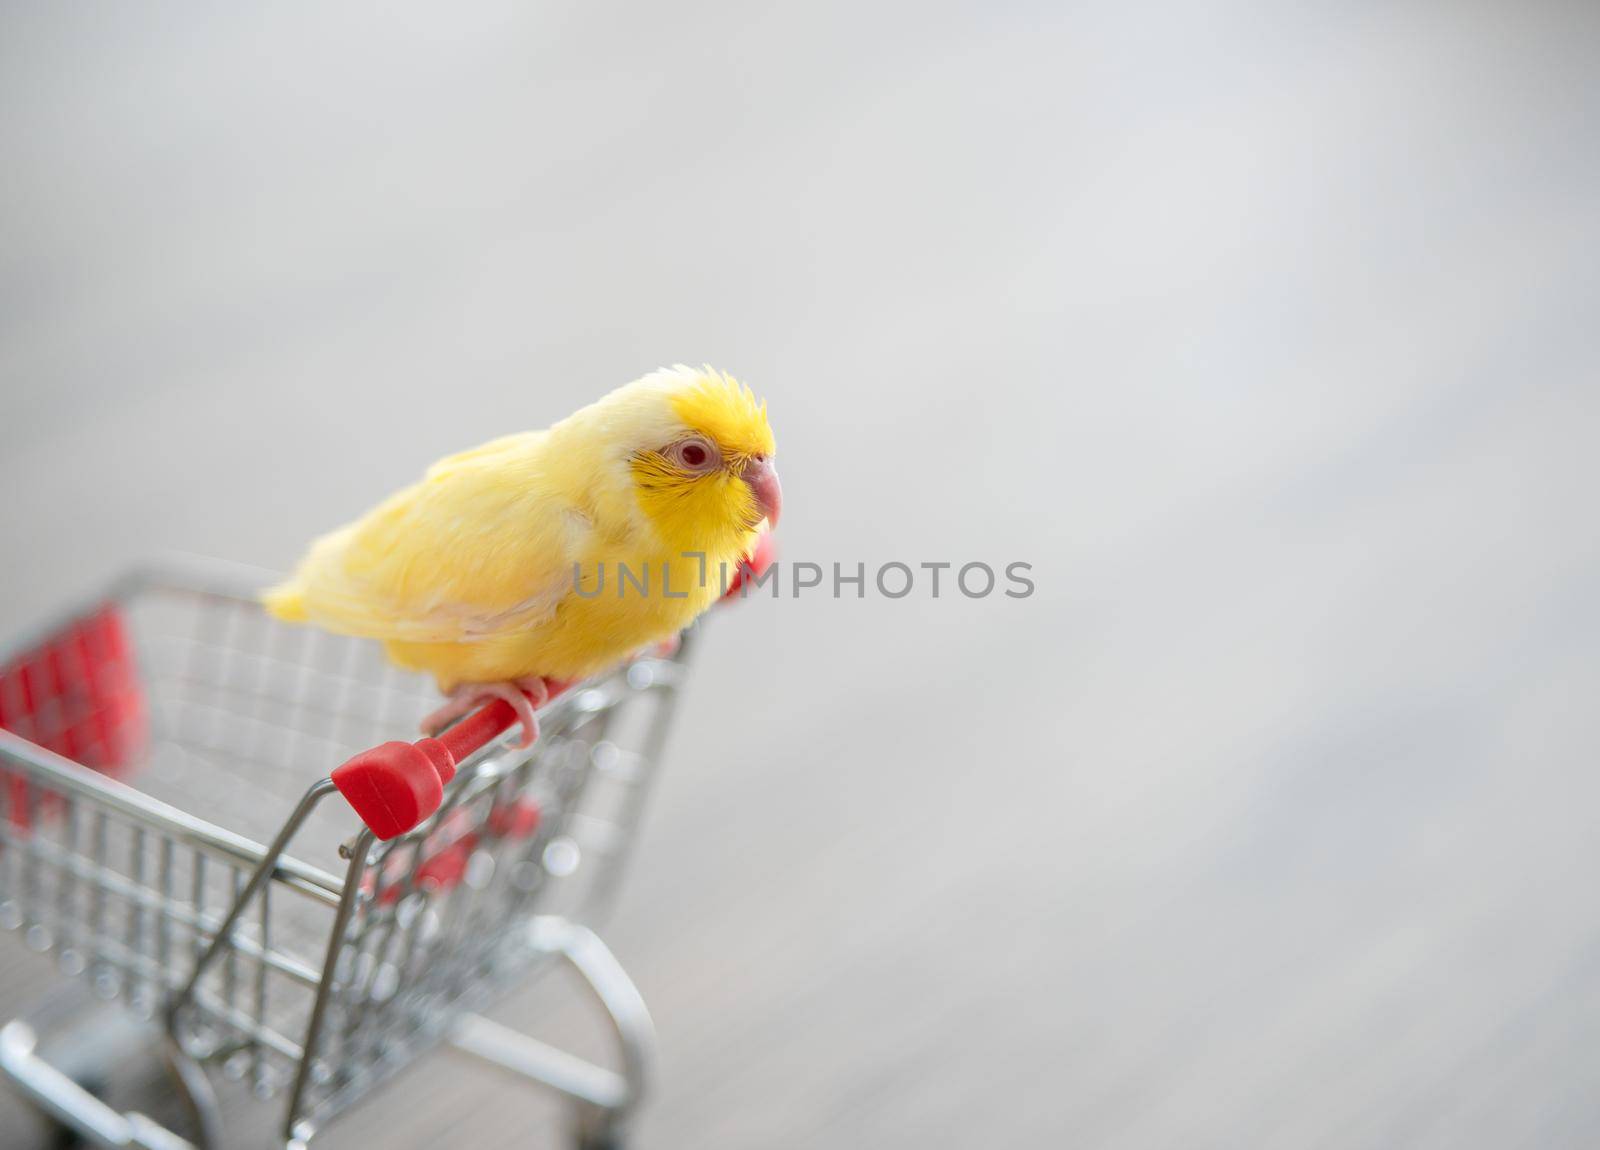 Tiny yellow parrot parakeet Forpus bird on little shopping cart. by sirawit99